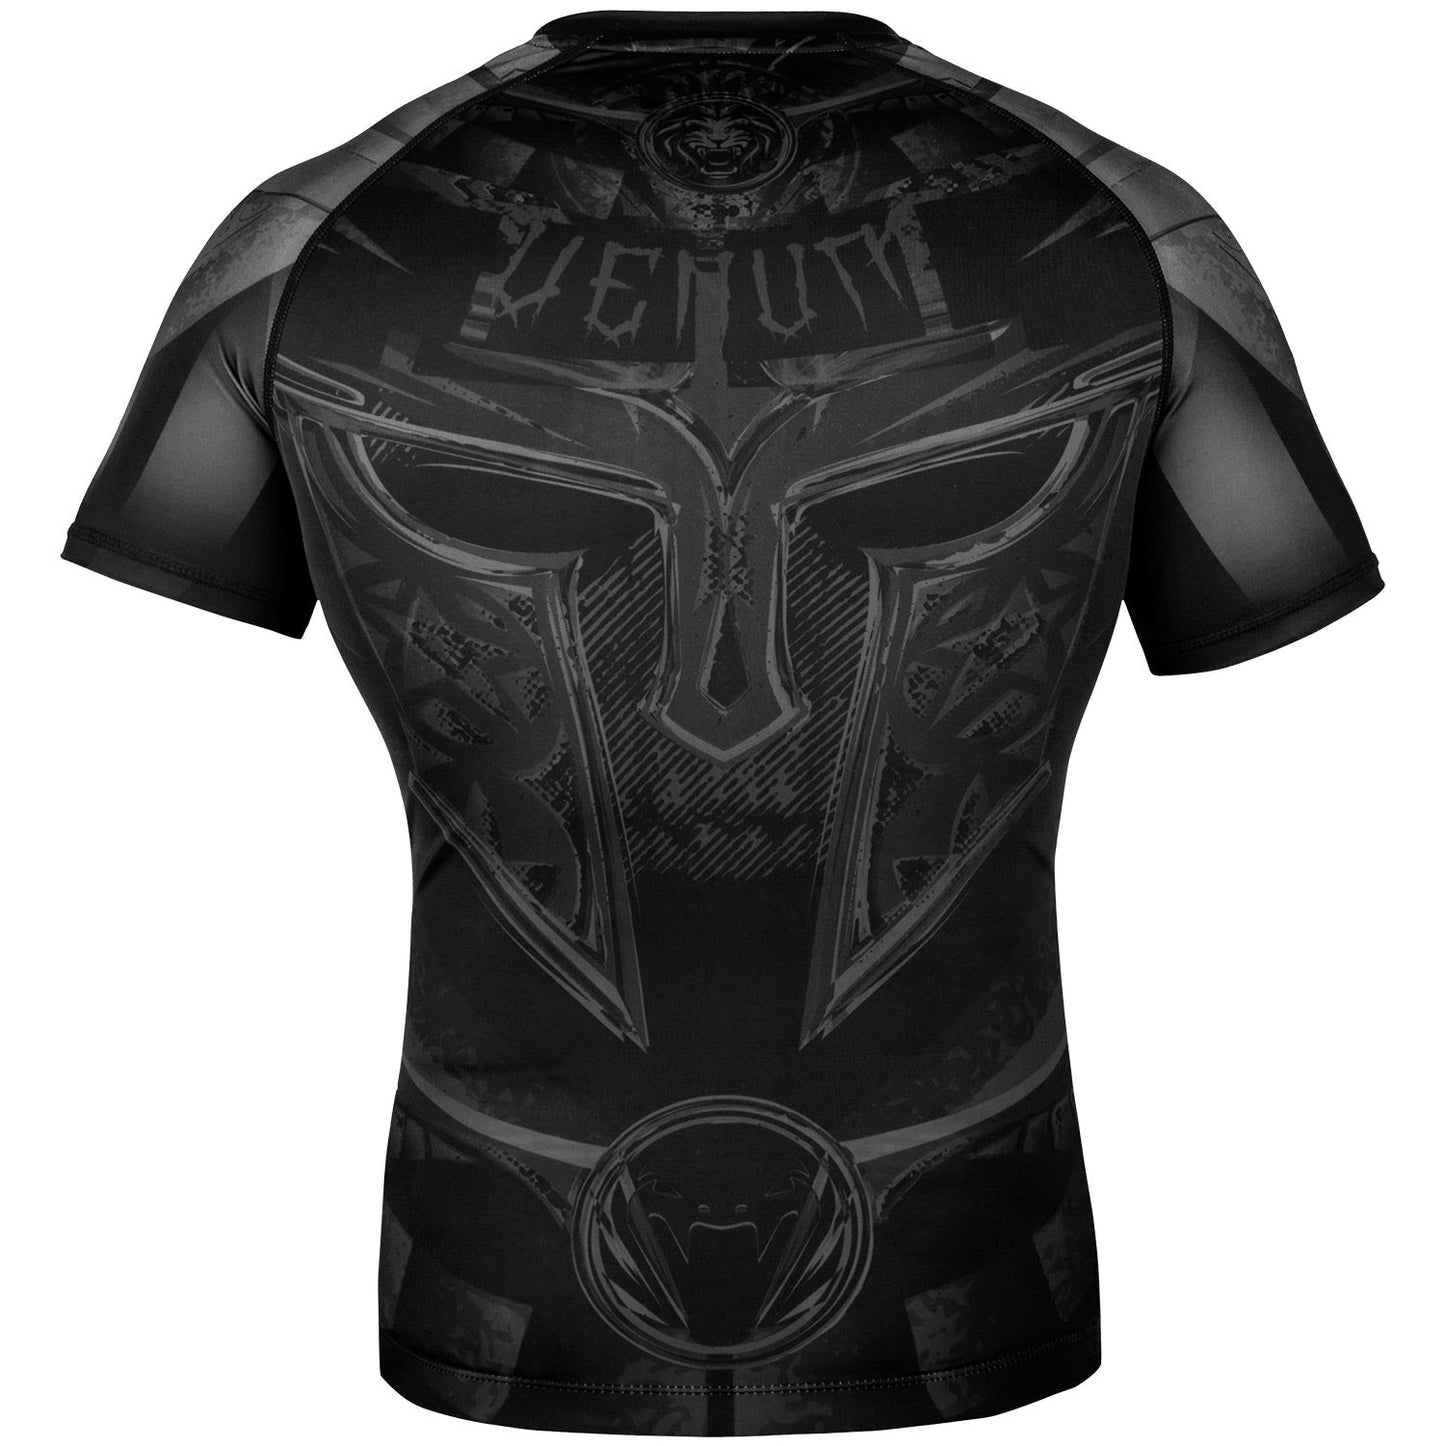 Venum Gladiator 3.0 Rashguard - Short Sleeves - Black/Black